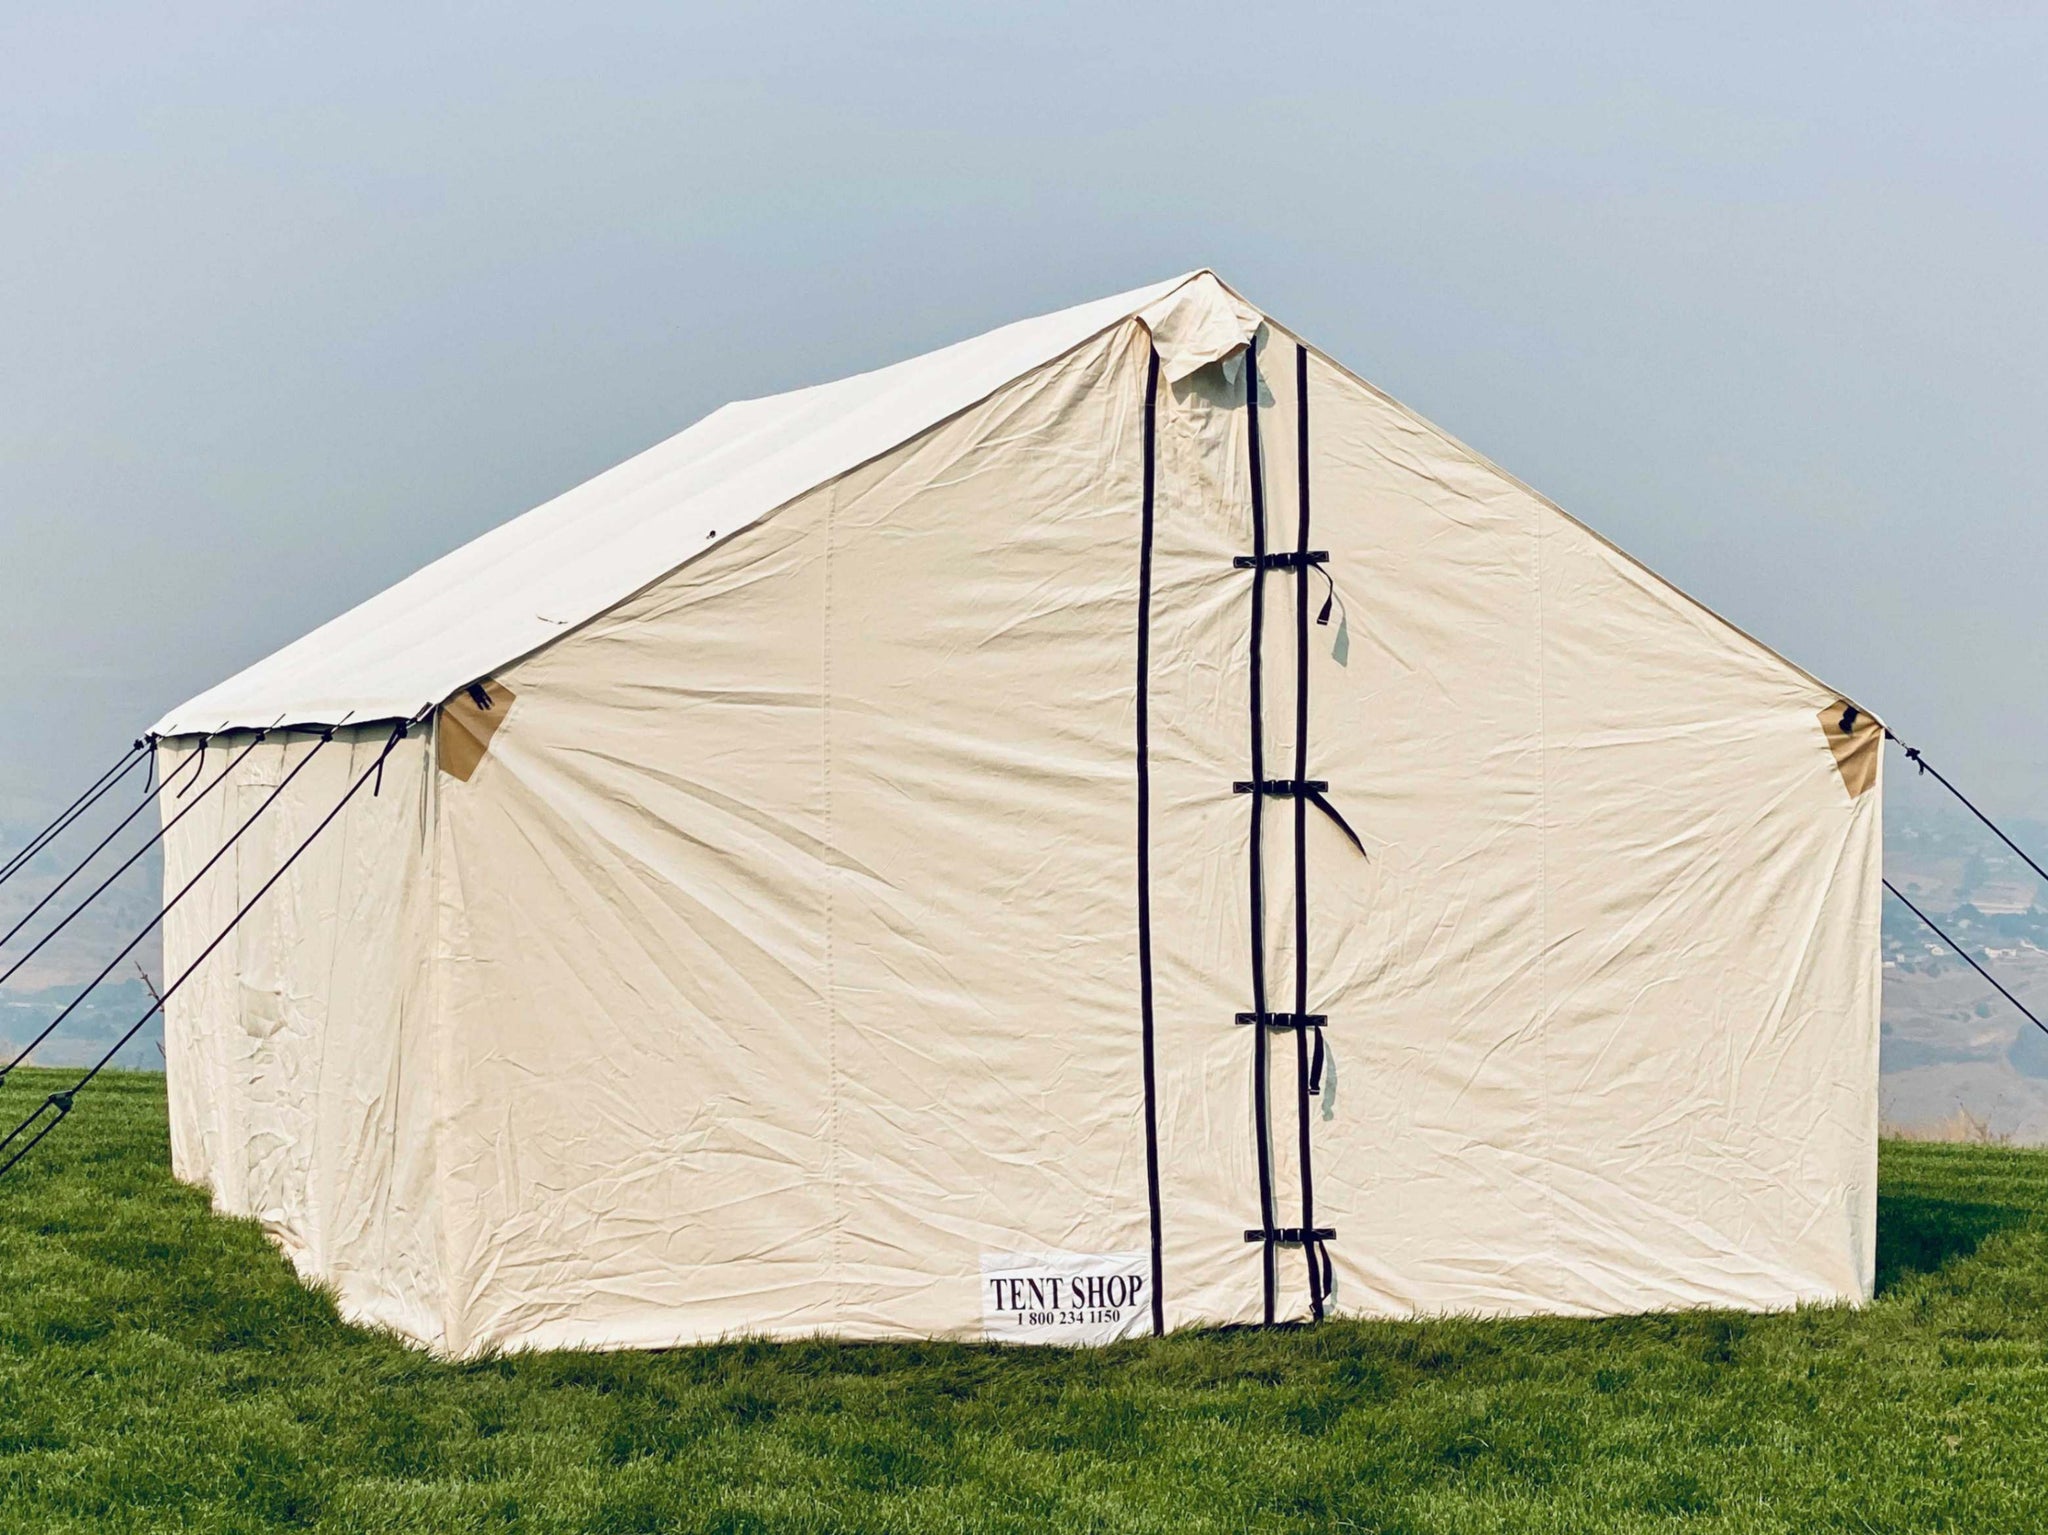 Wilderness Wall Tent & Angle Kit to Make Frame